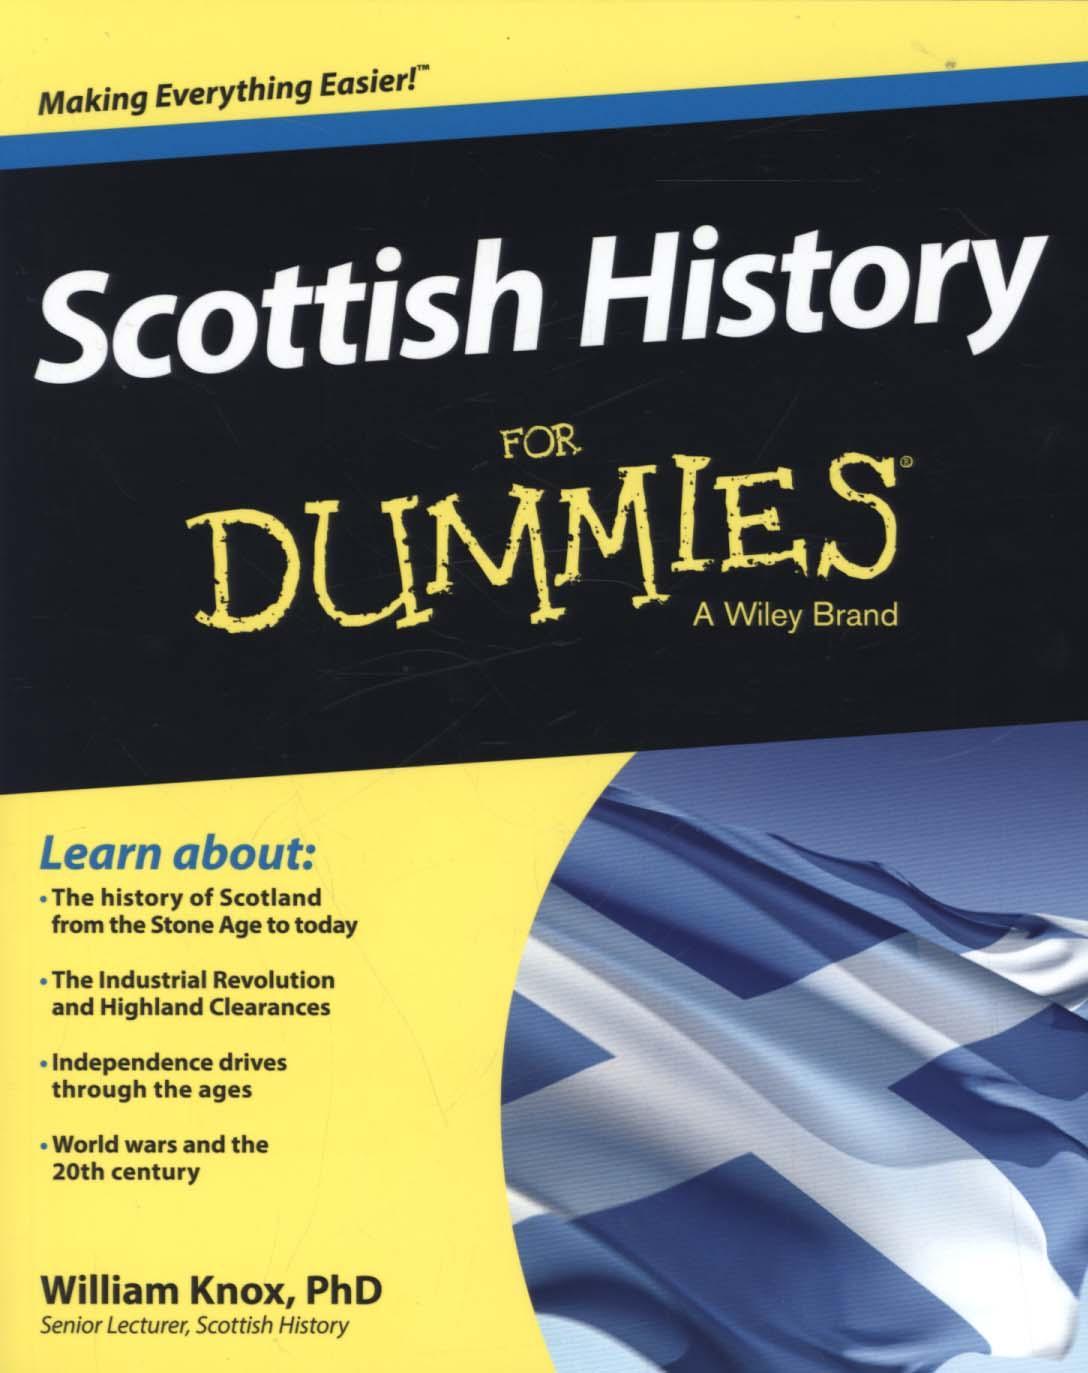 Scottish History For Dummies